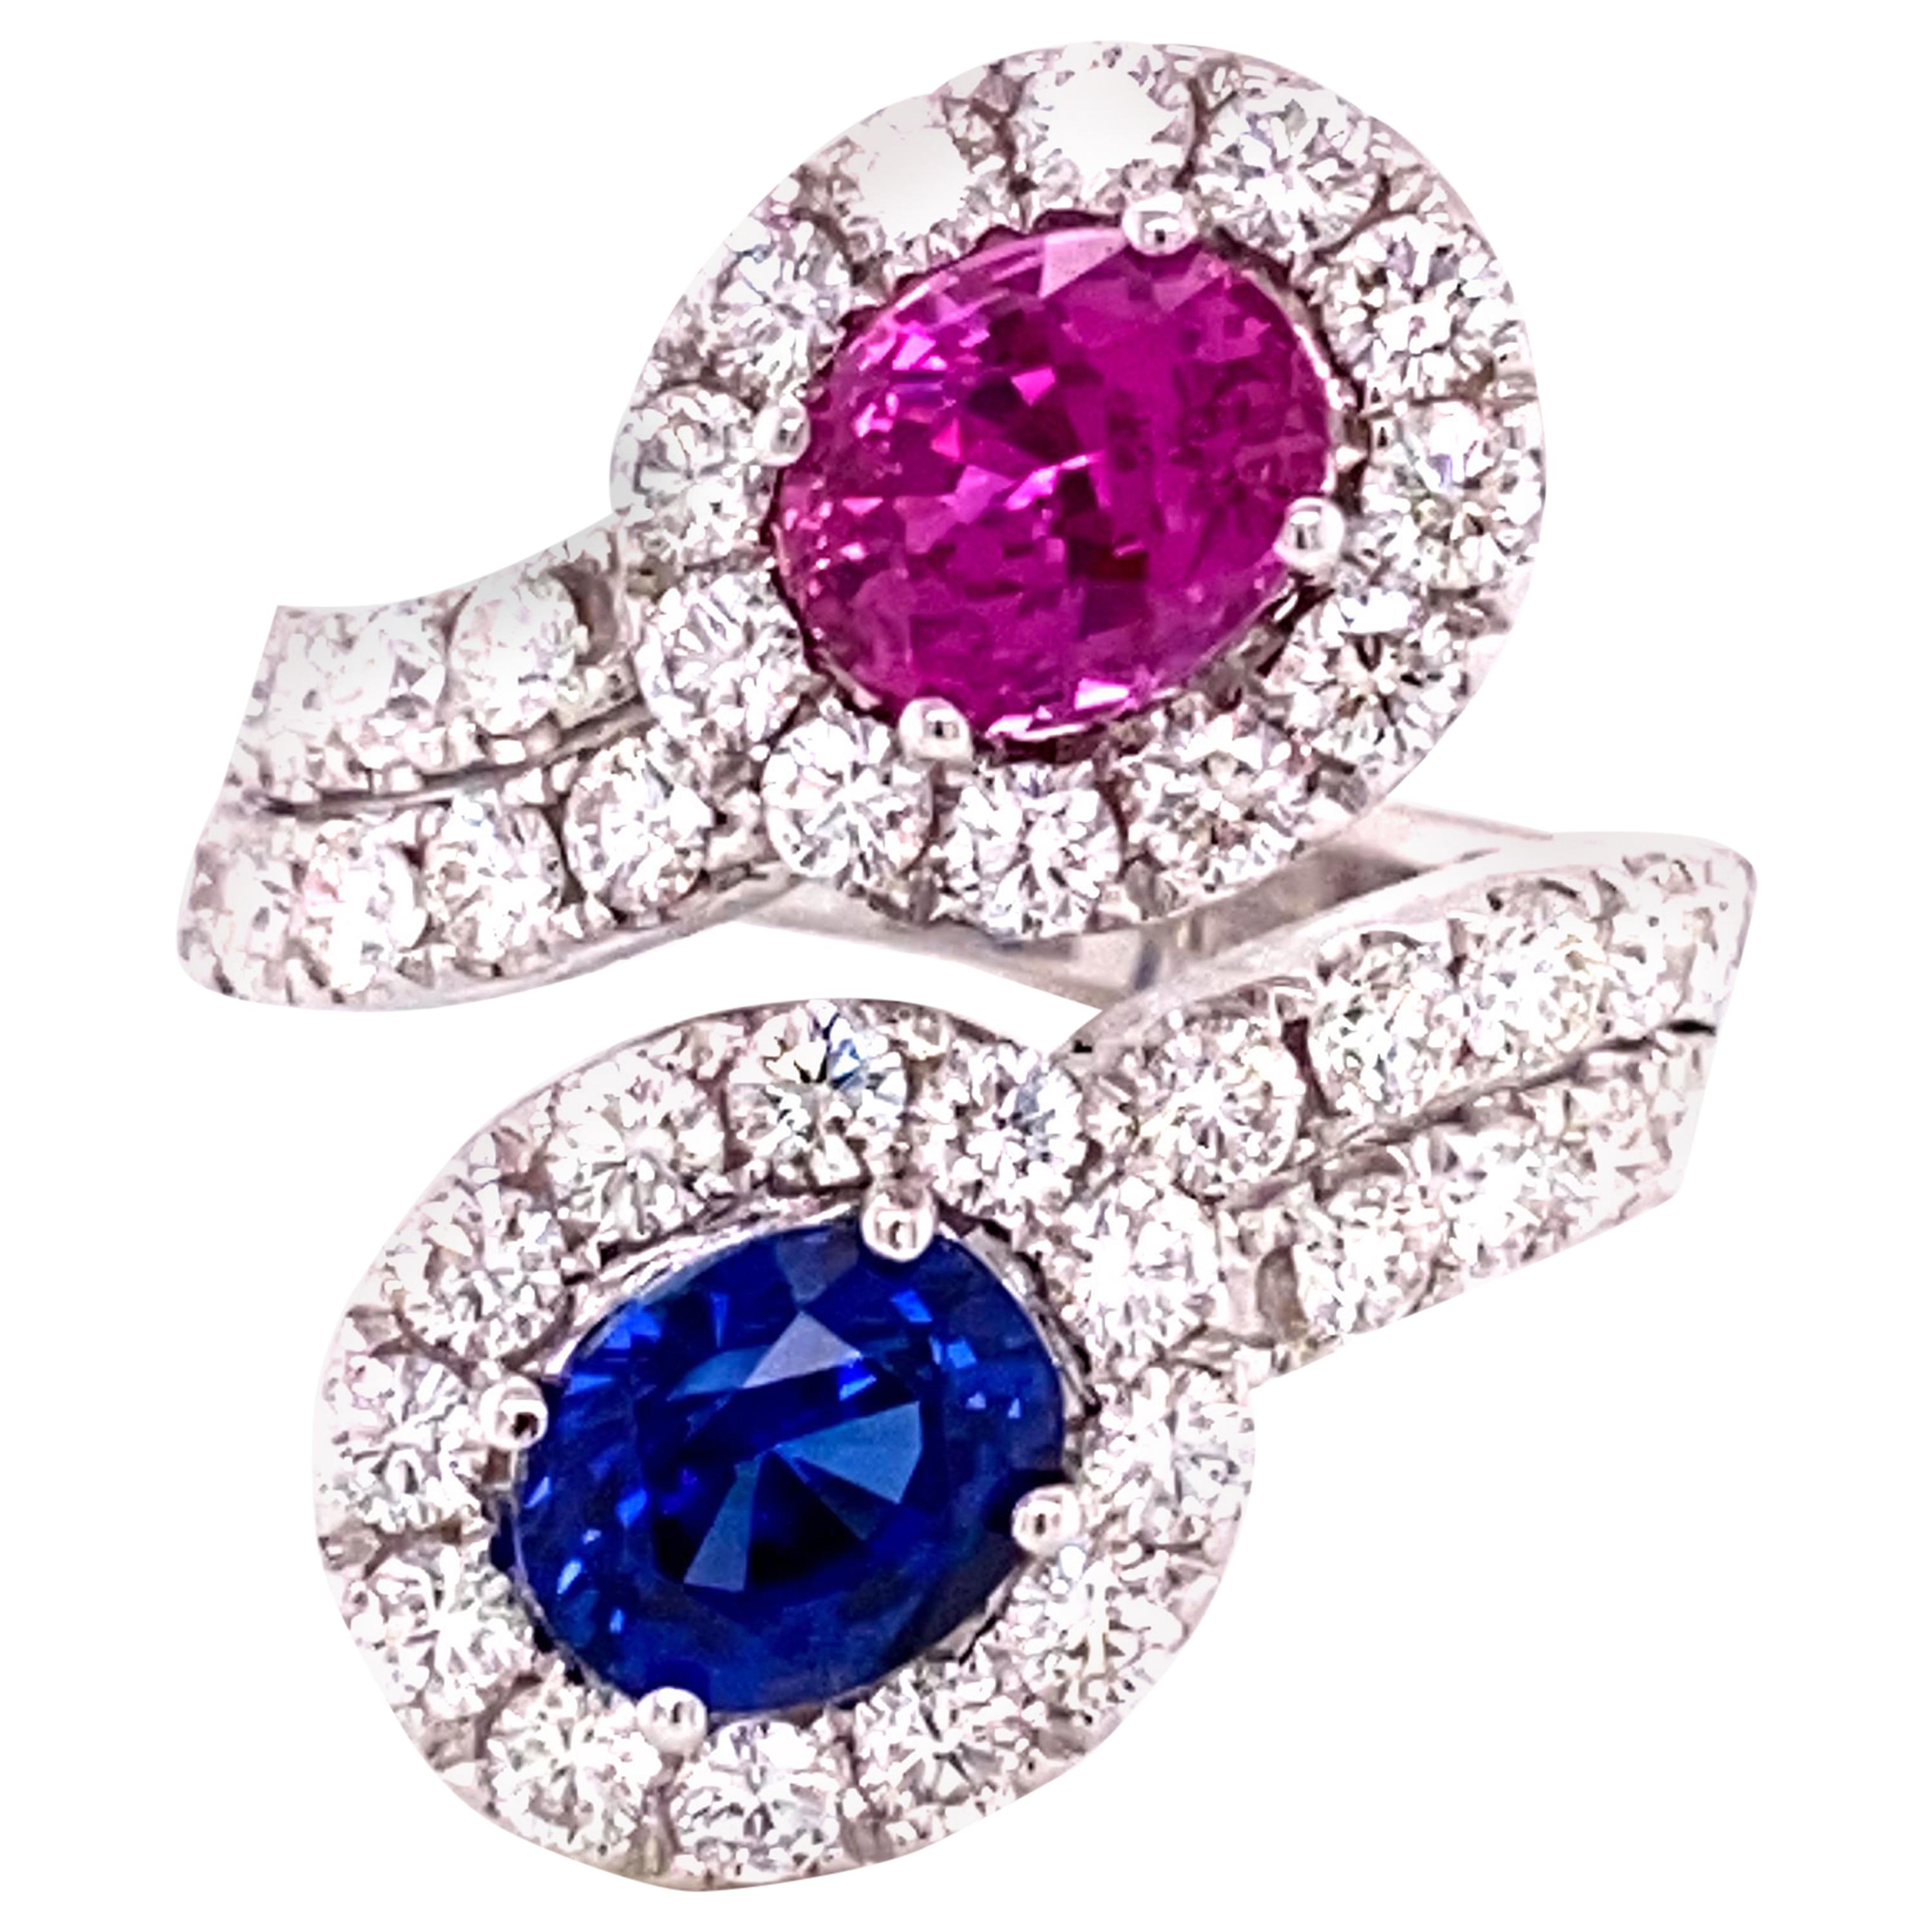 GRS Certified 1.59 Carat Blue Sapphire and 1.54 Carat Pink Sapphire Diamond Ring